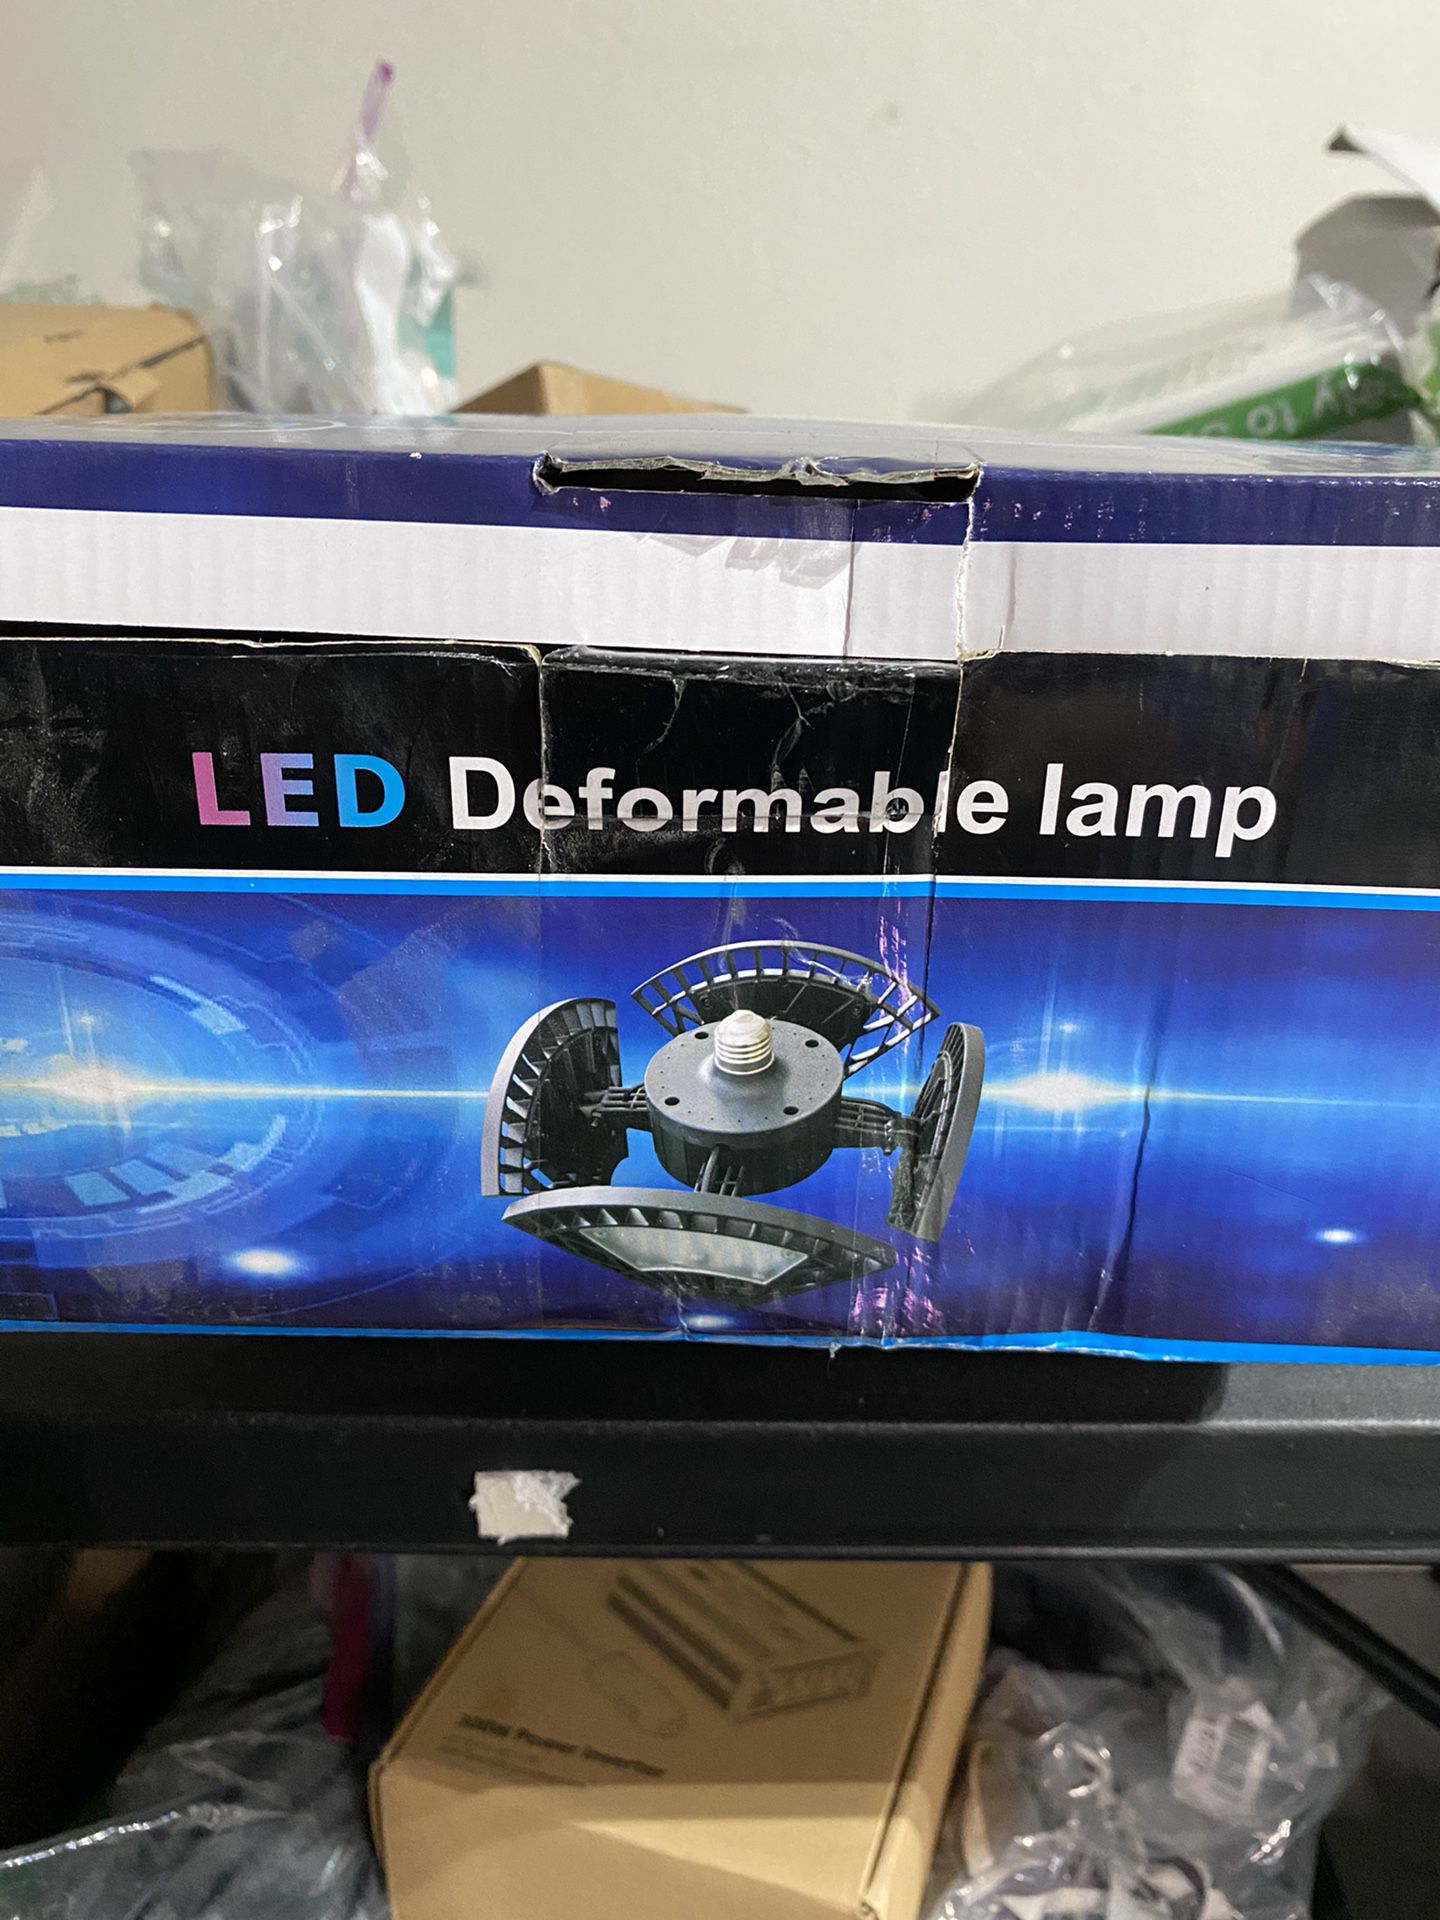 Led Defórmenle lamp